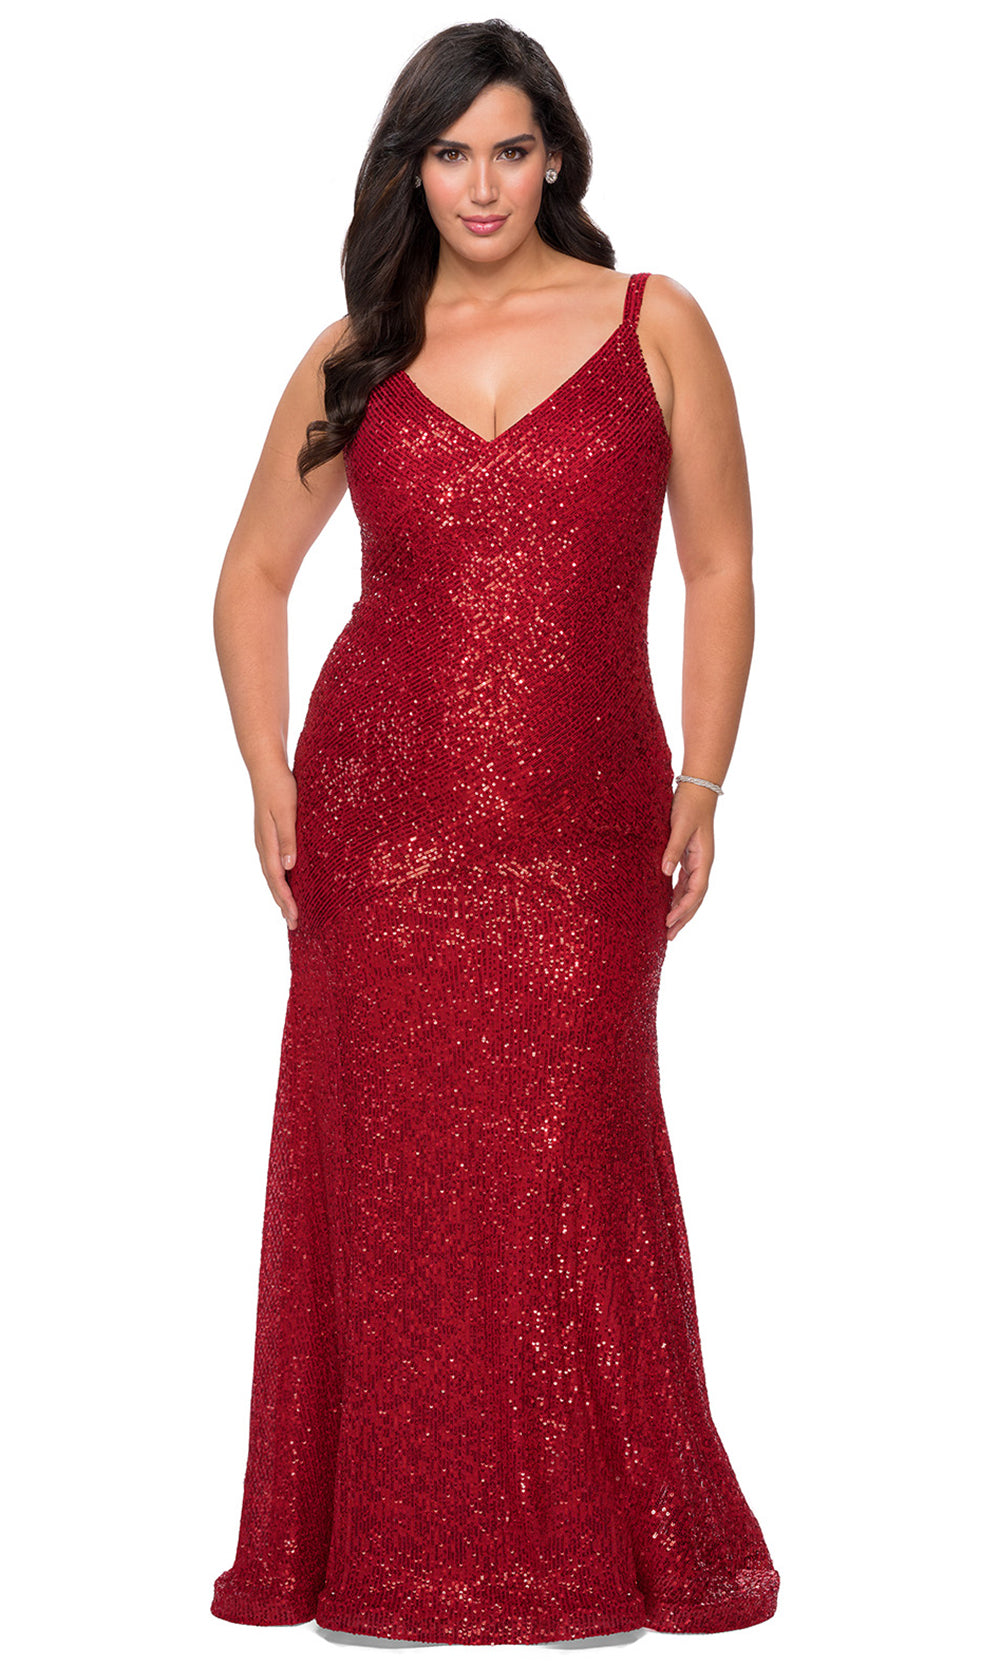 La Femme - 29006 Sleeveless Sequined Sheath Dress In Red